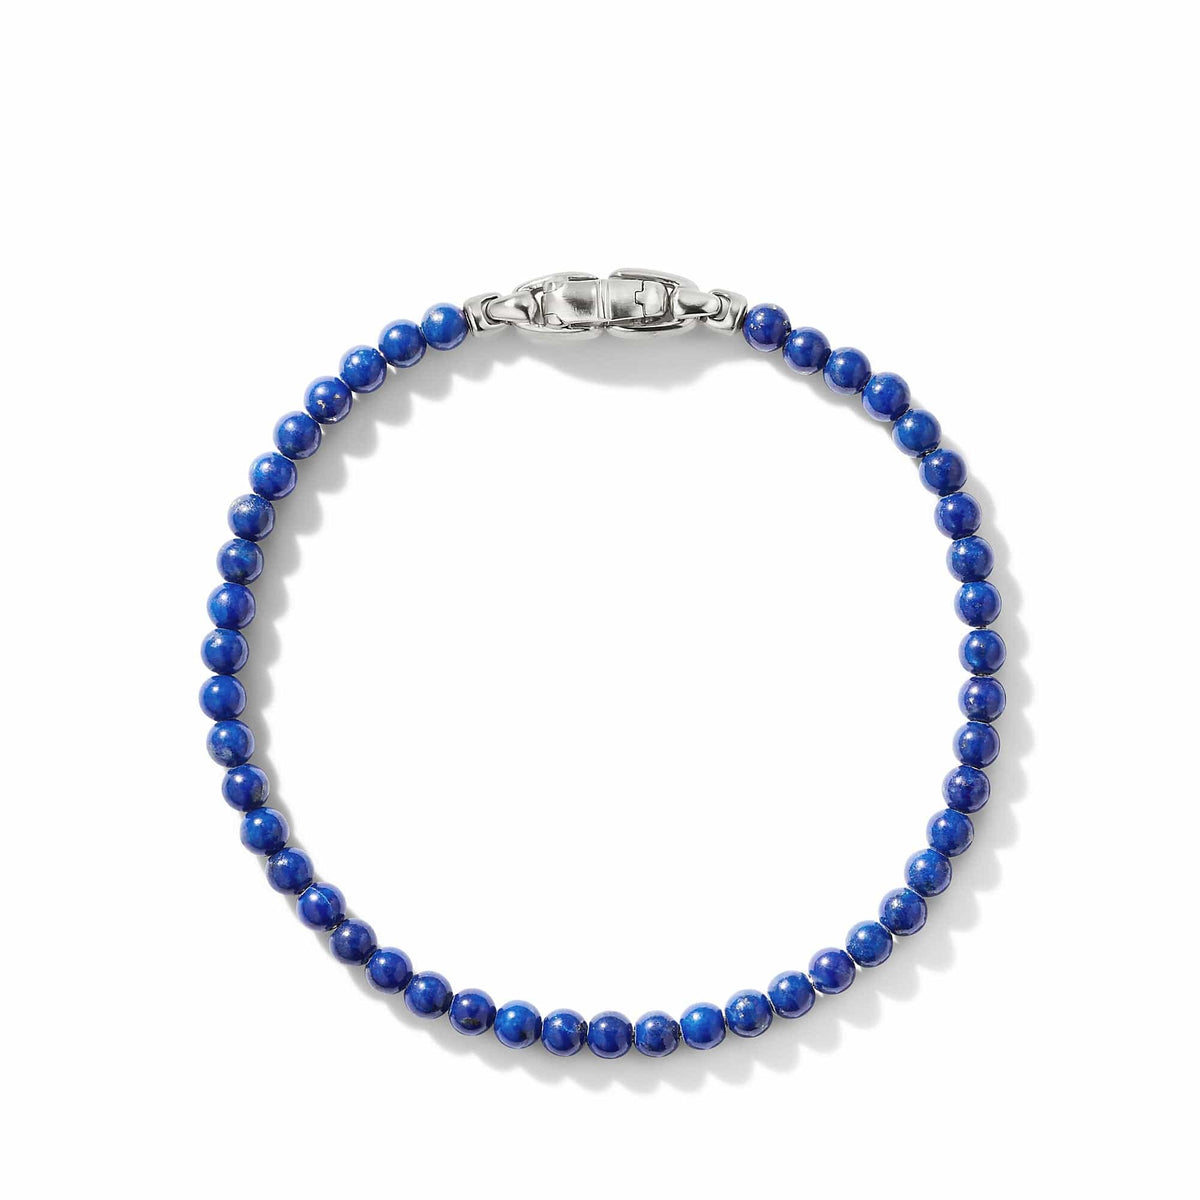 Spiritual Beads Bracelet with Lapis, Long's Jewelers